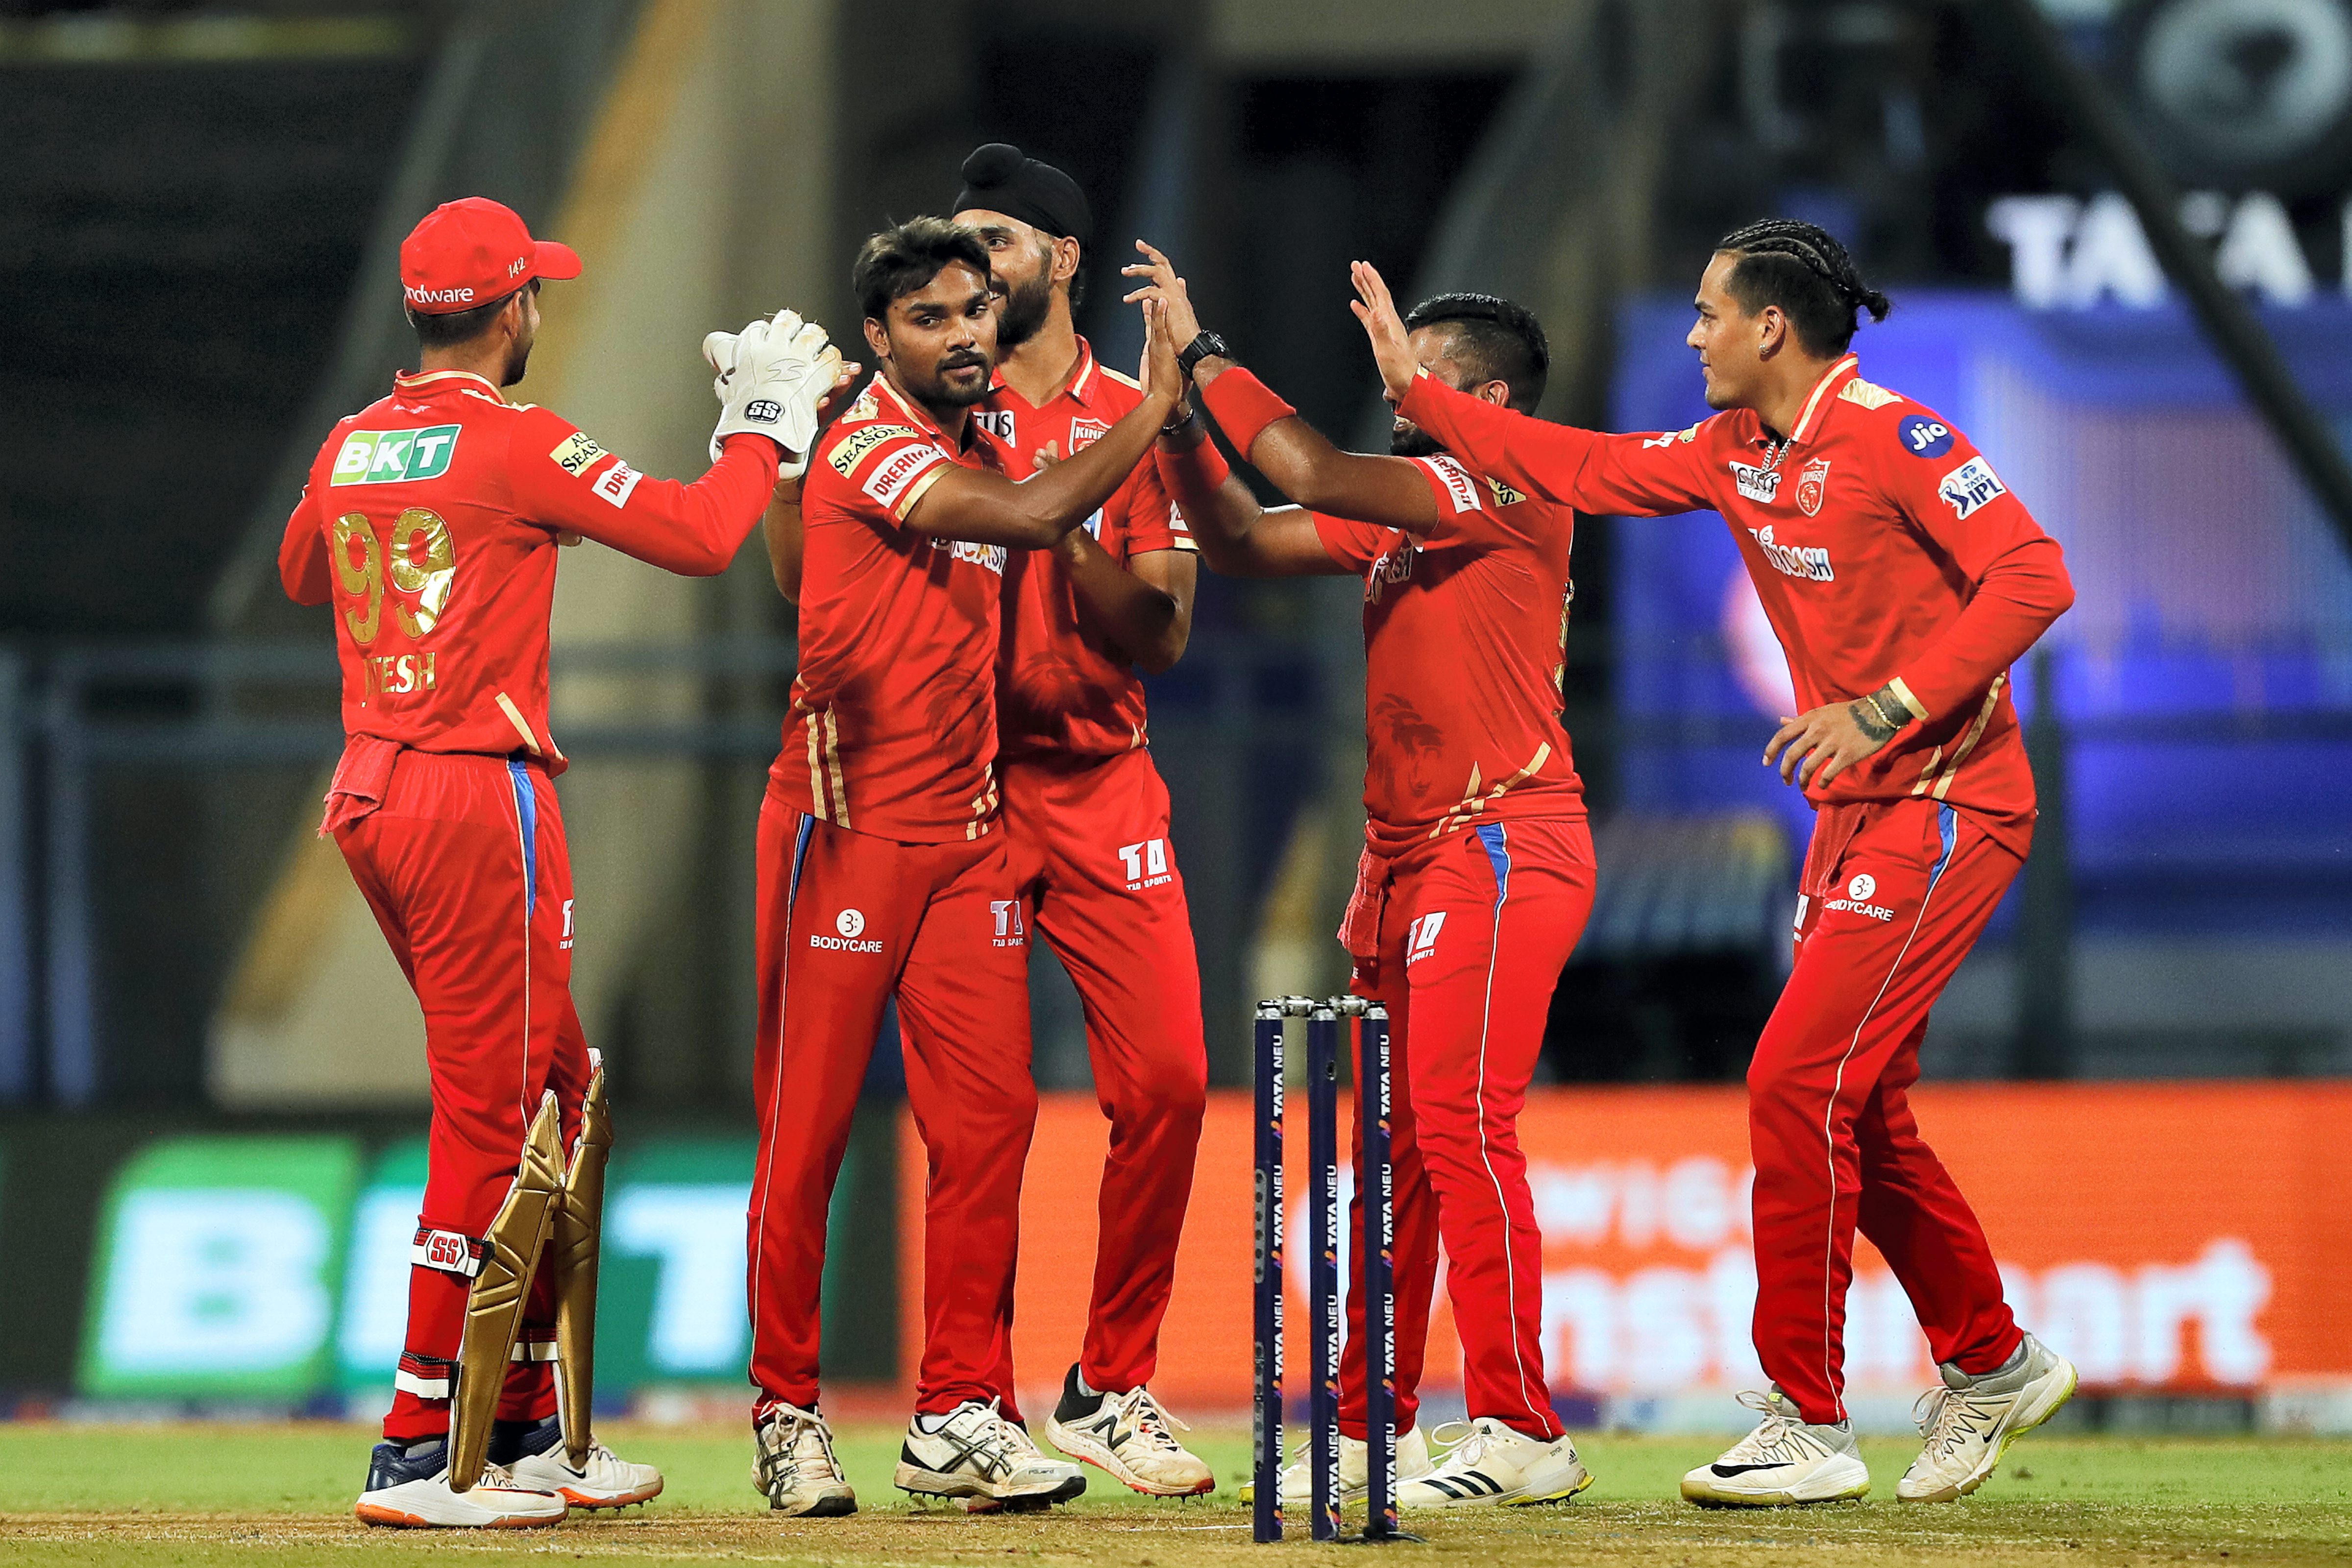 IPL 2022: Punjab Kings, Sunrisers Hyderabad aim to finish tournament on a high